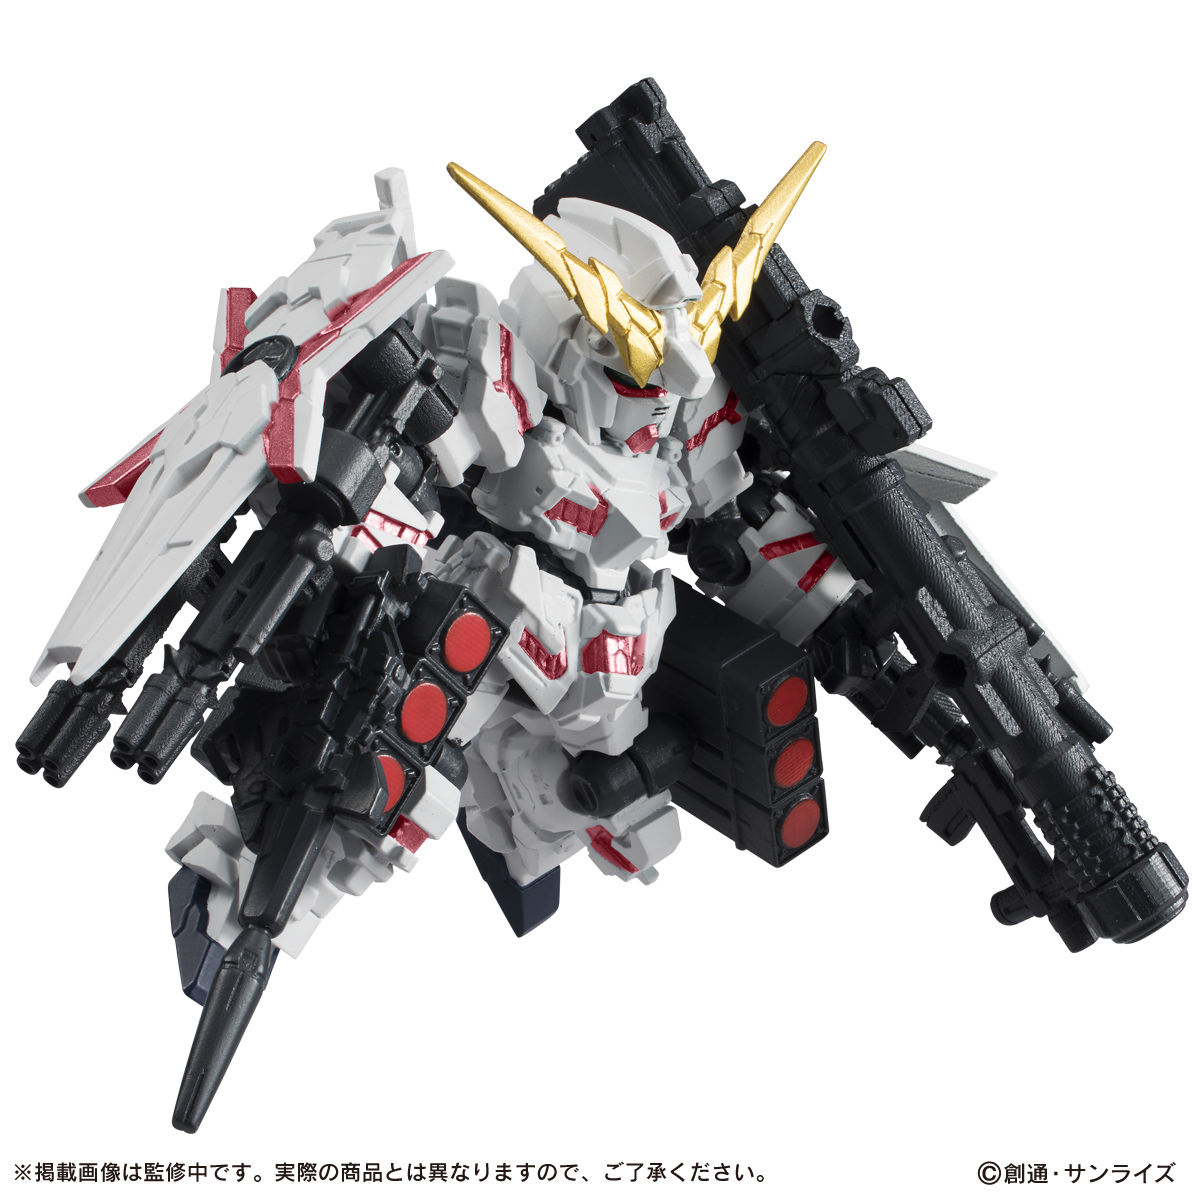 Gashapon Gundam Series: Gundam Mobile Suit Ensemble EX13 RX-0 Full Armor Unicorn Gundam(Destry Mode)